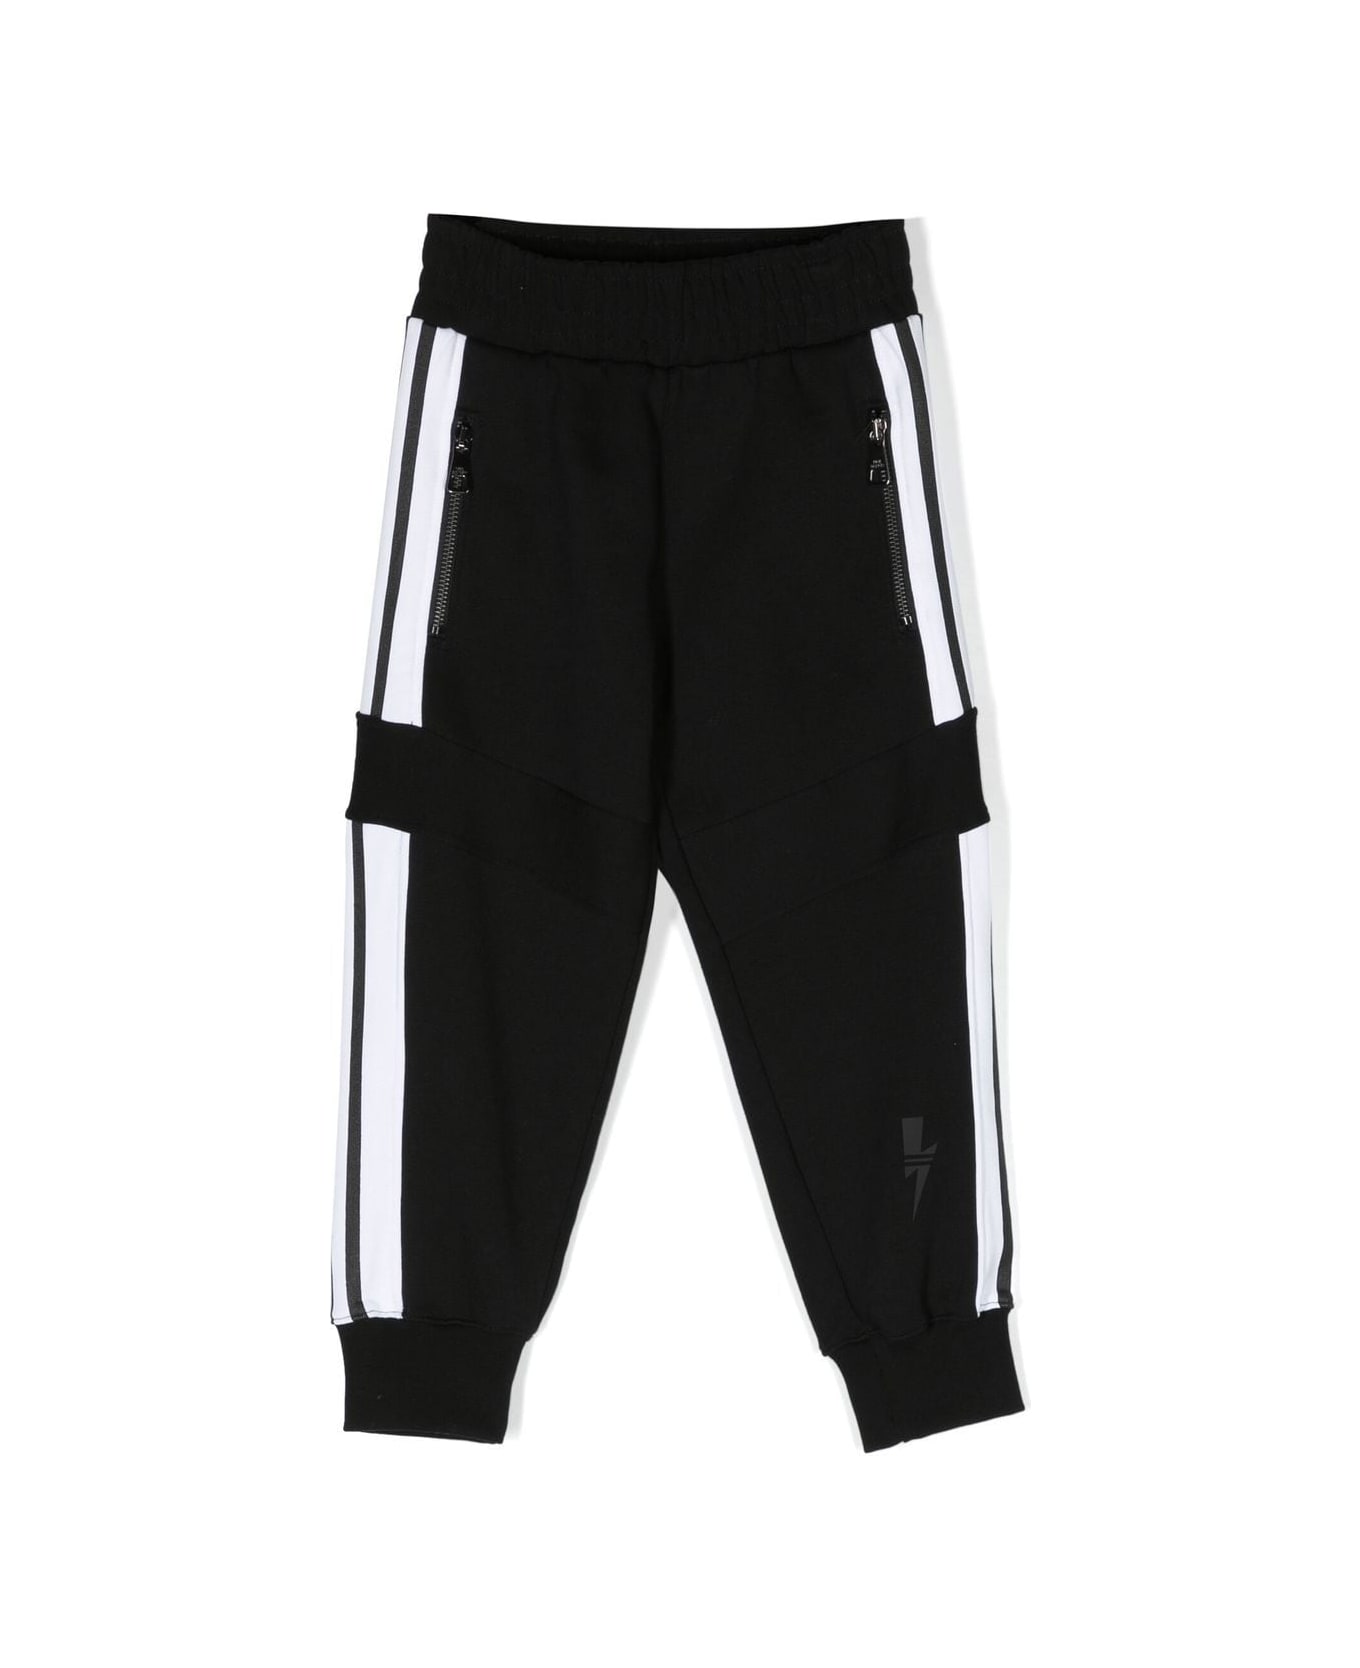 Neil Barrett Sports Trousers With Print - Black ボトムス